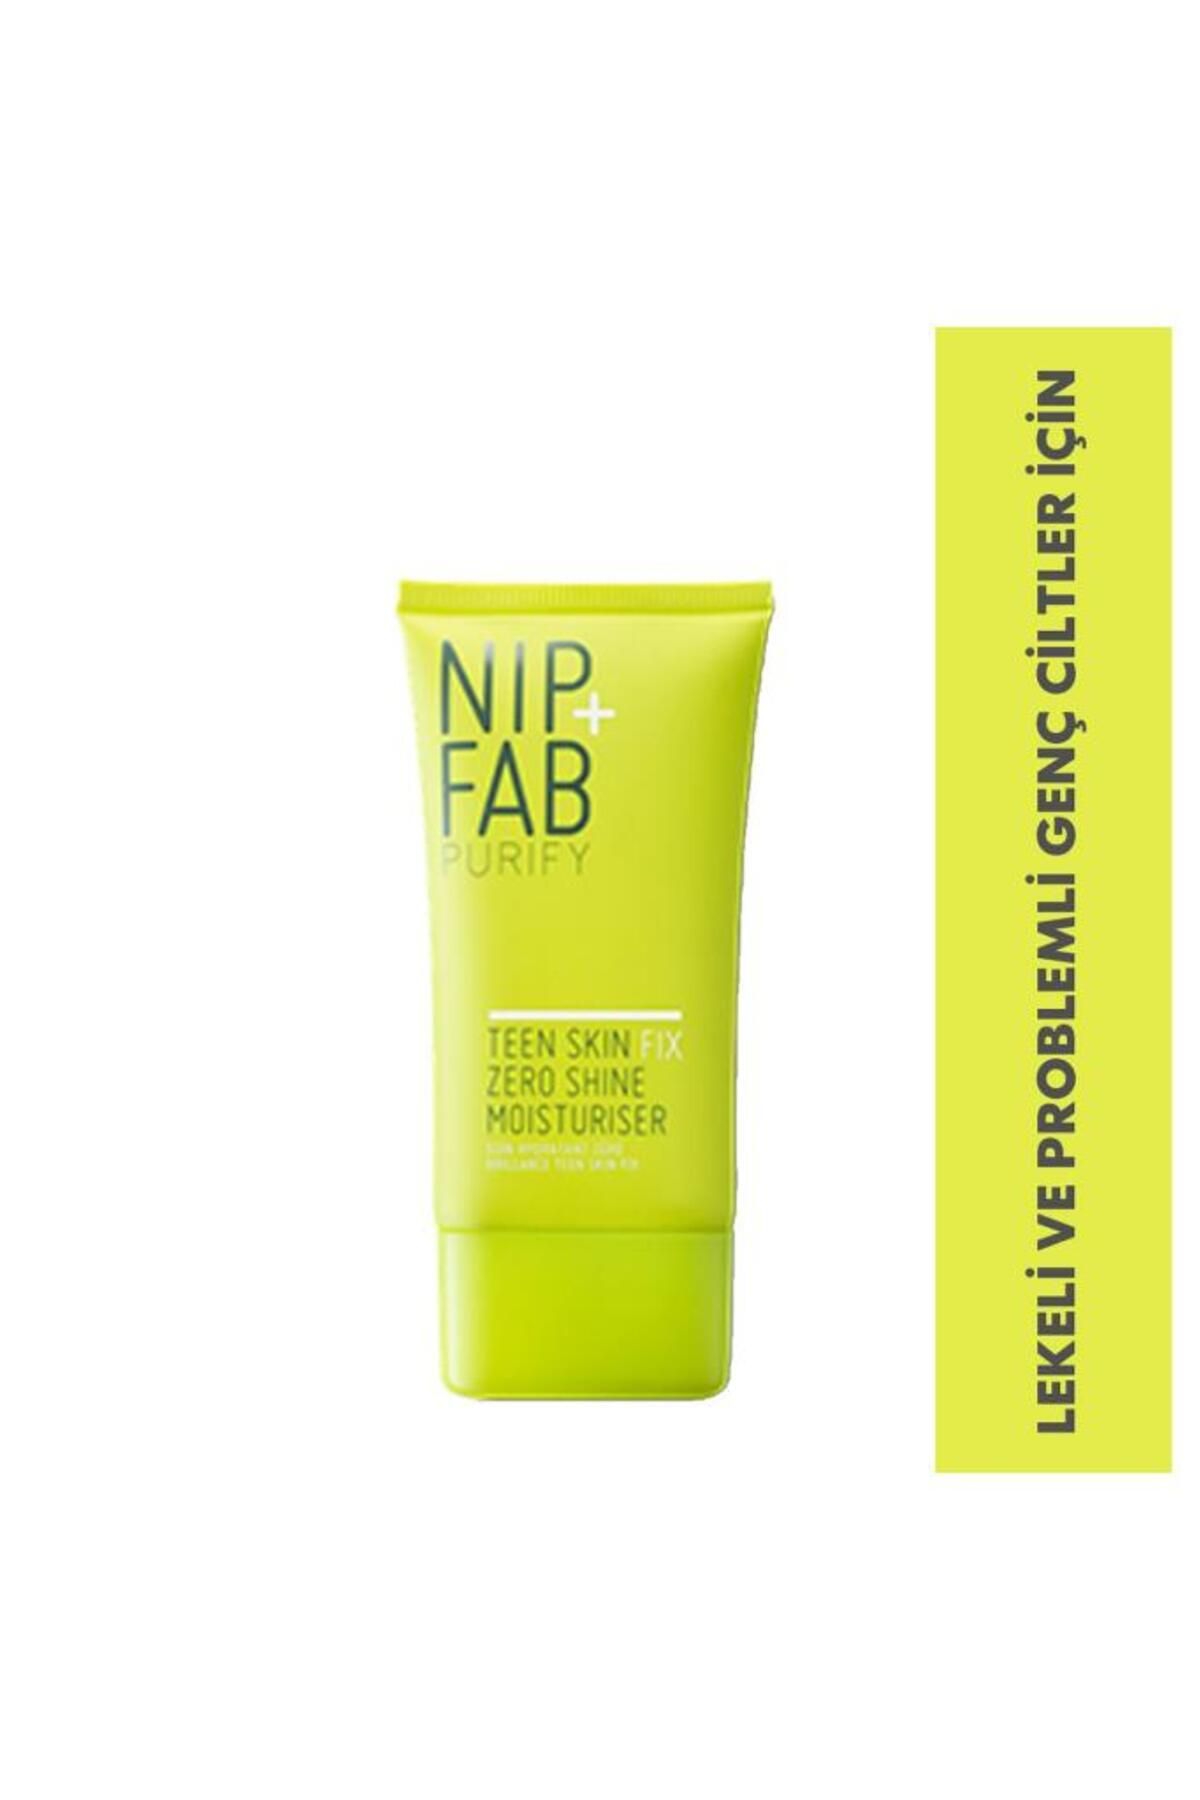 NIP+FAB Teen Skin cilt Tonu Eşitleyici Krem 40 ml